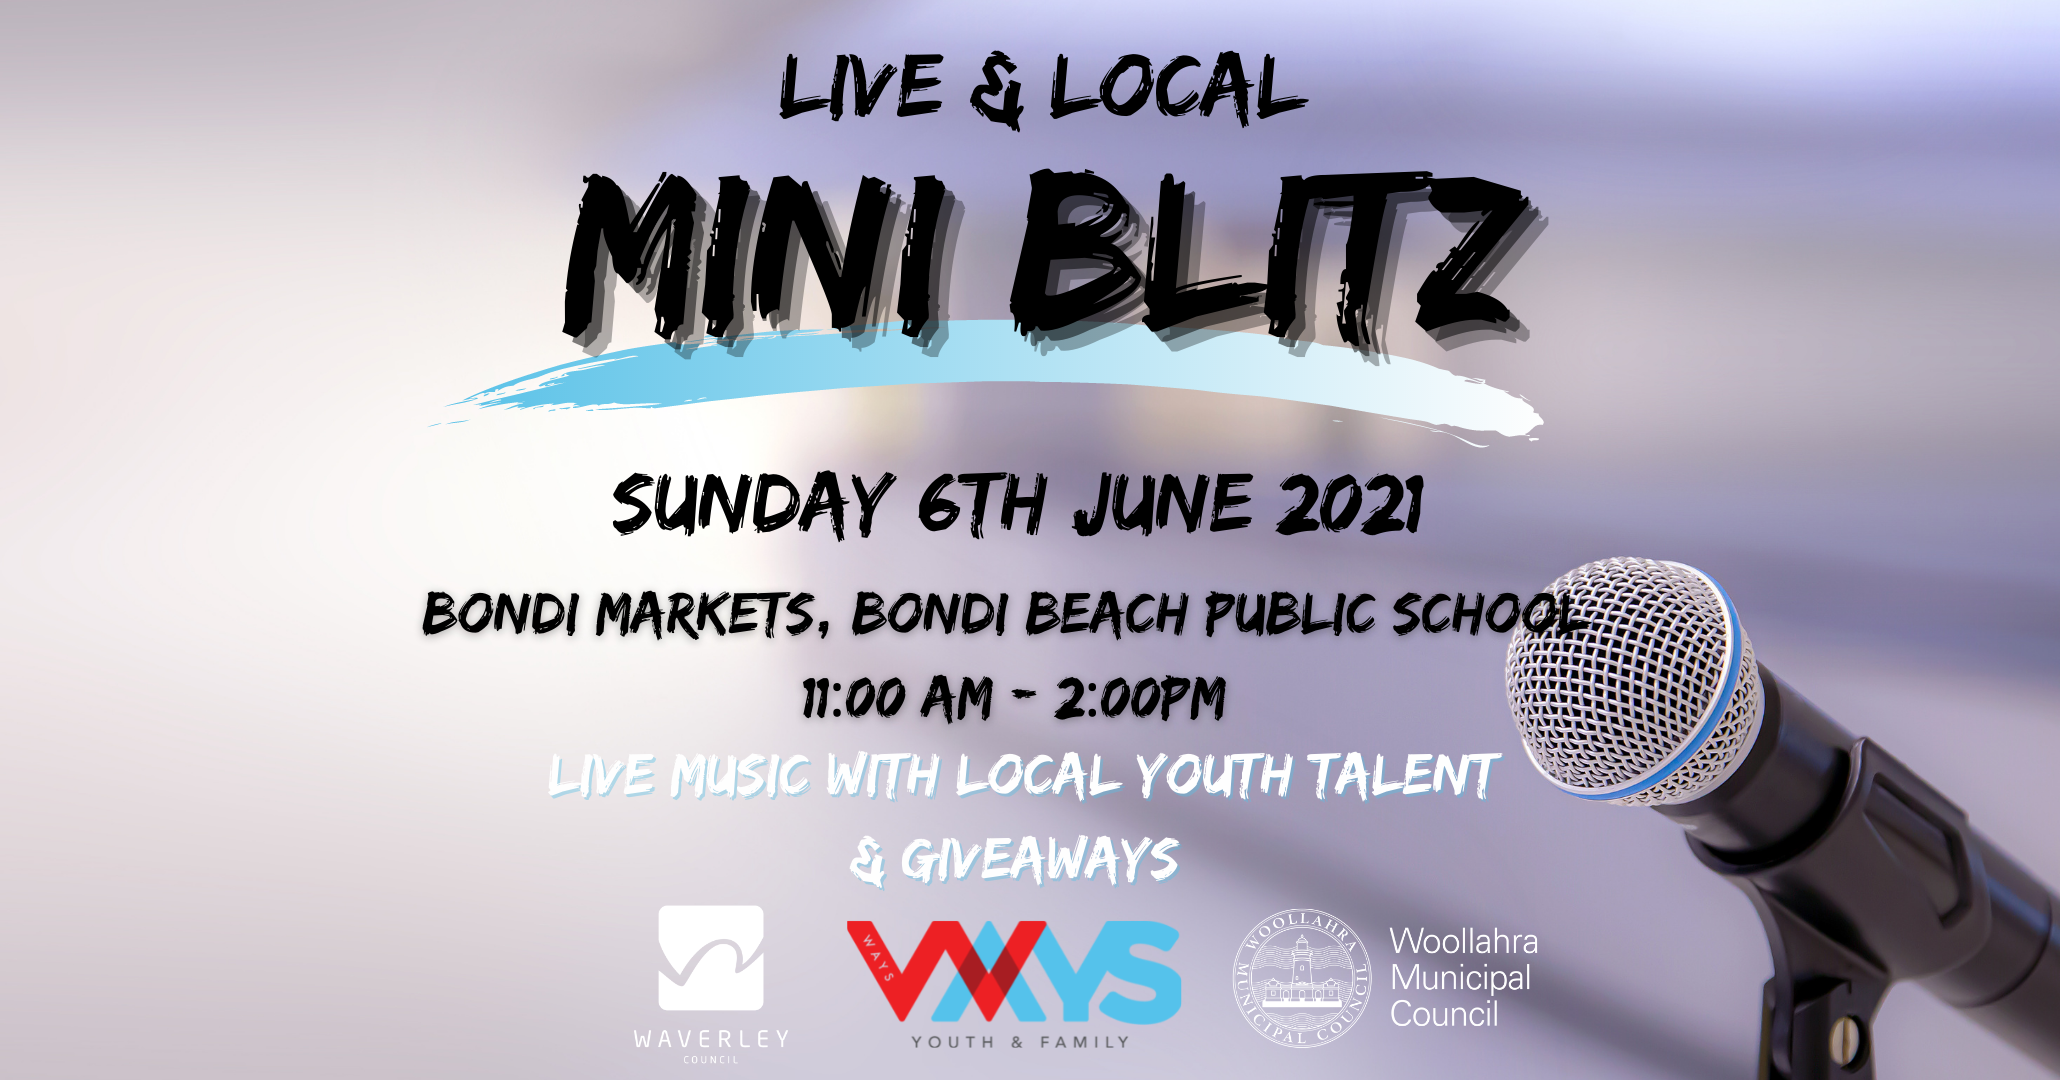 Mini Blitz – bring youth music back to Bondi